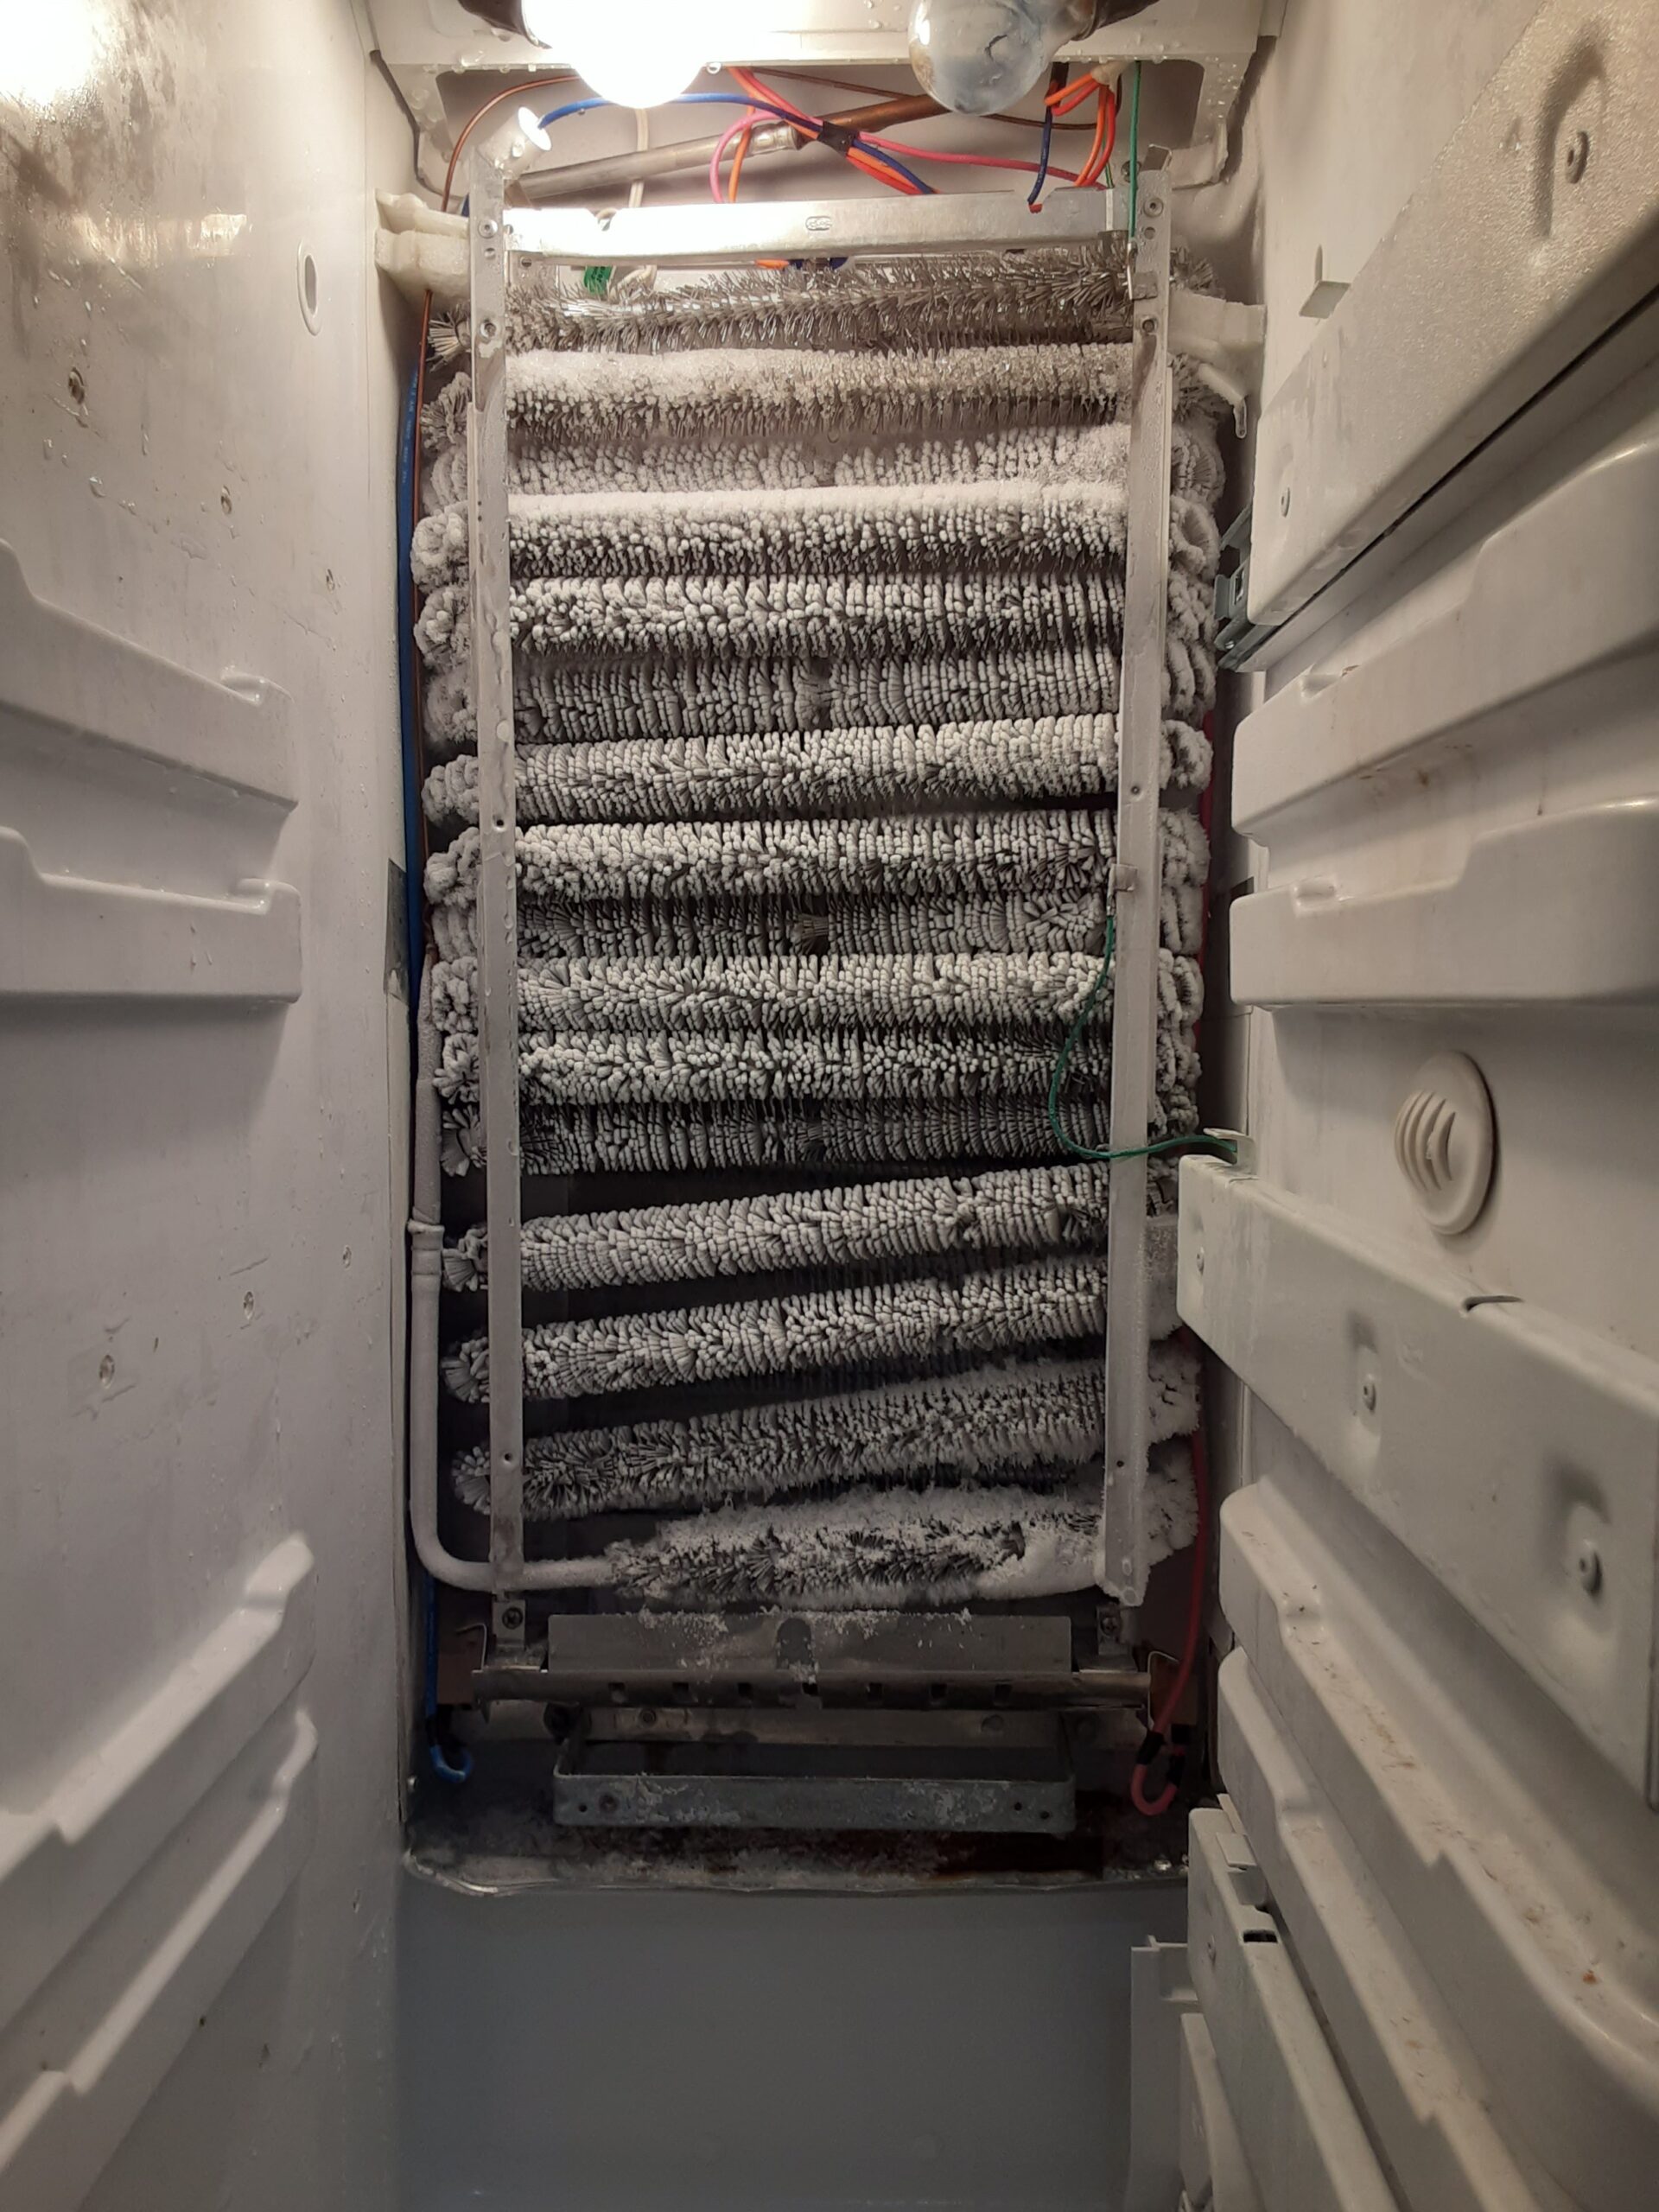 appliance repair refrigerator evaporator fan replaced boy ventura ln bellview fl 32526